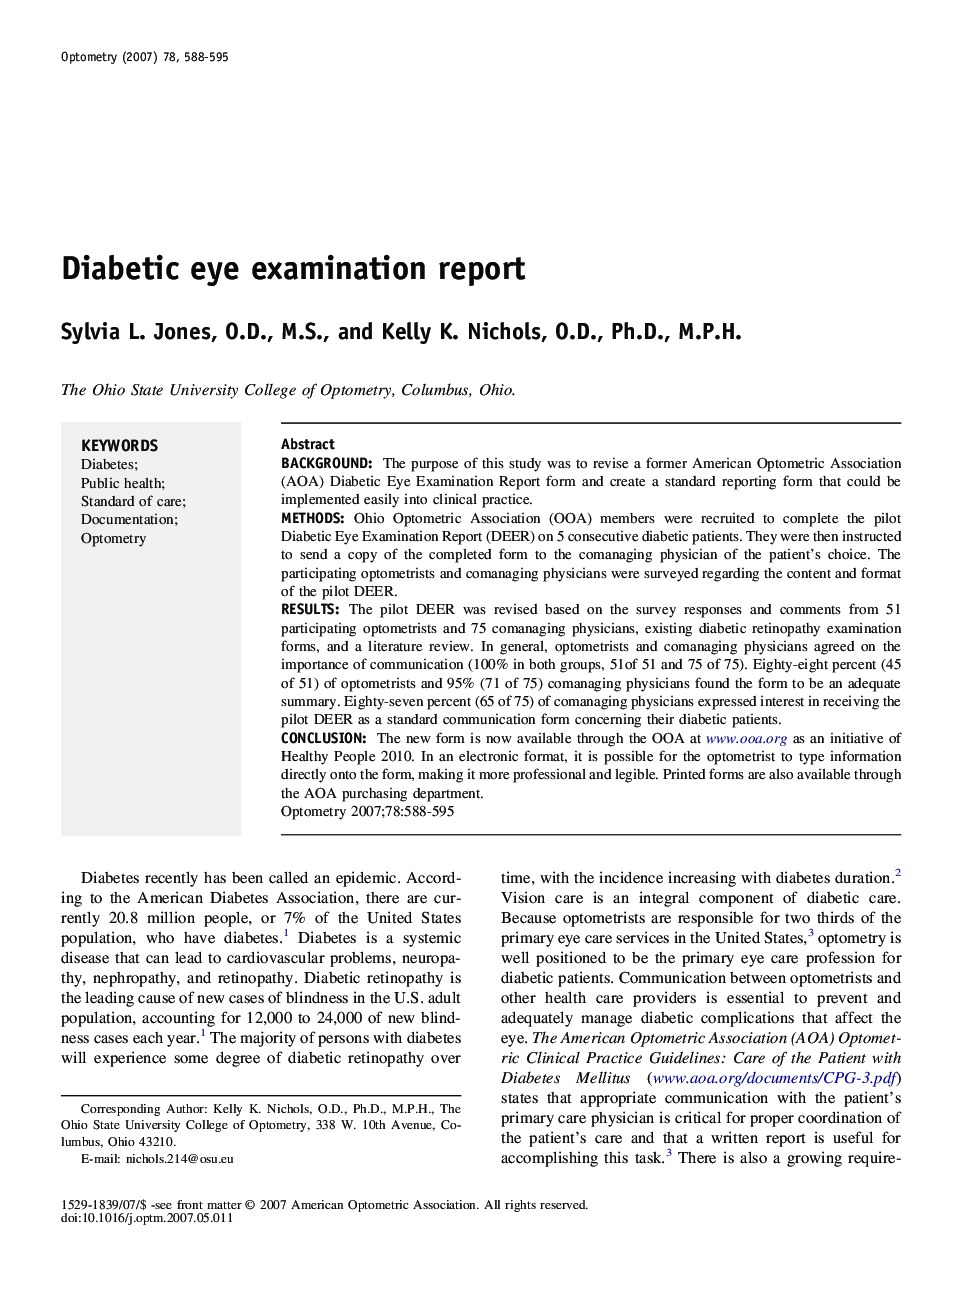 Diabetic eye examination report